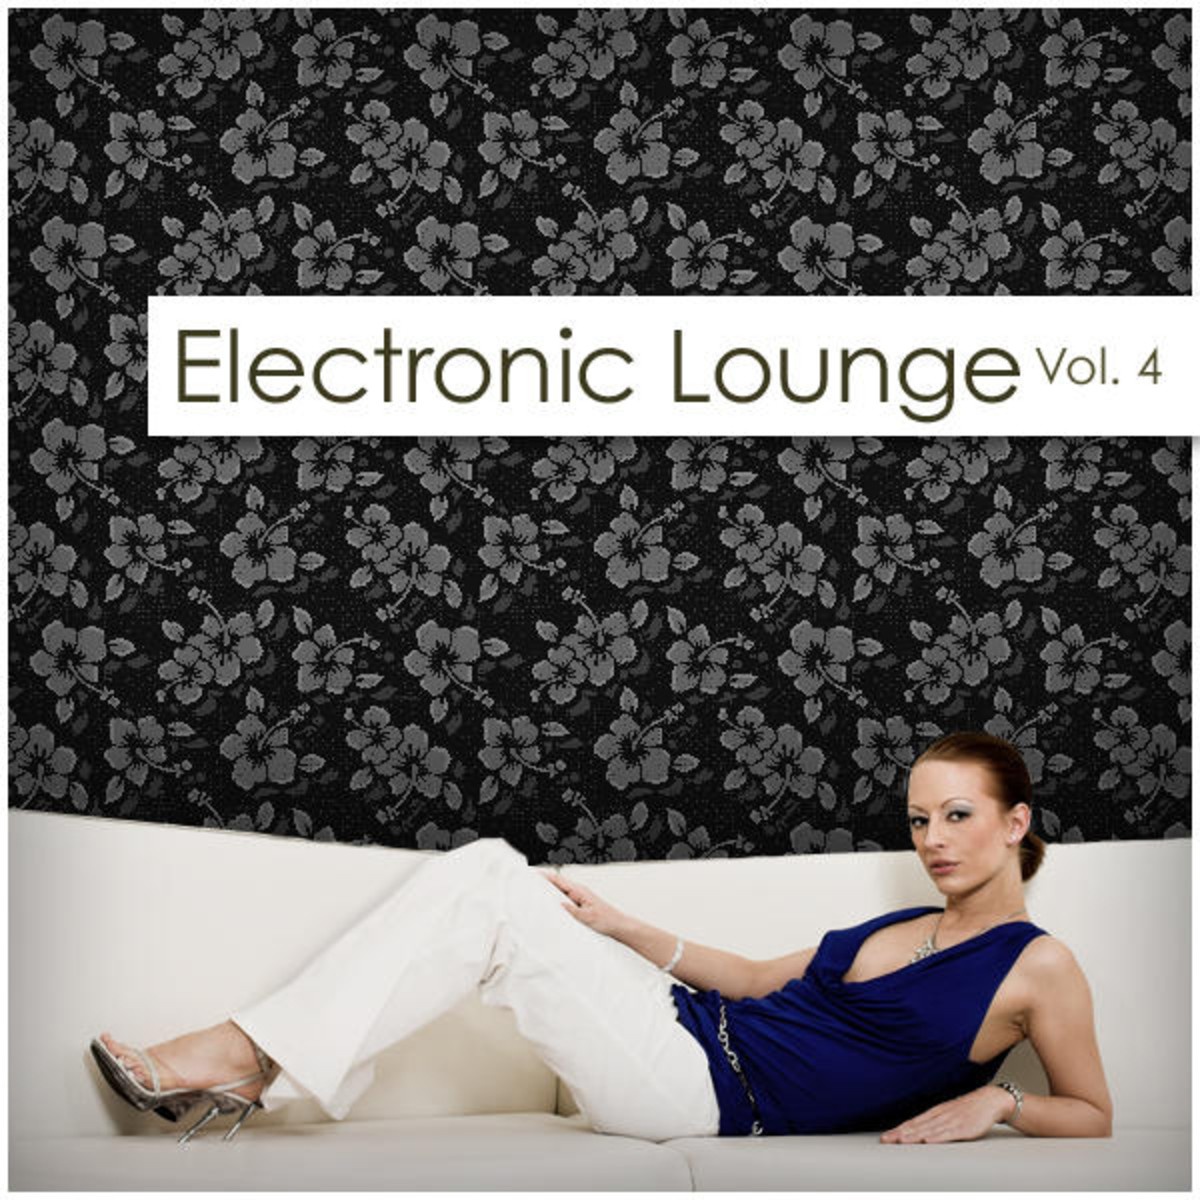 Electronic Lounge Vol. 4